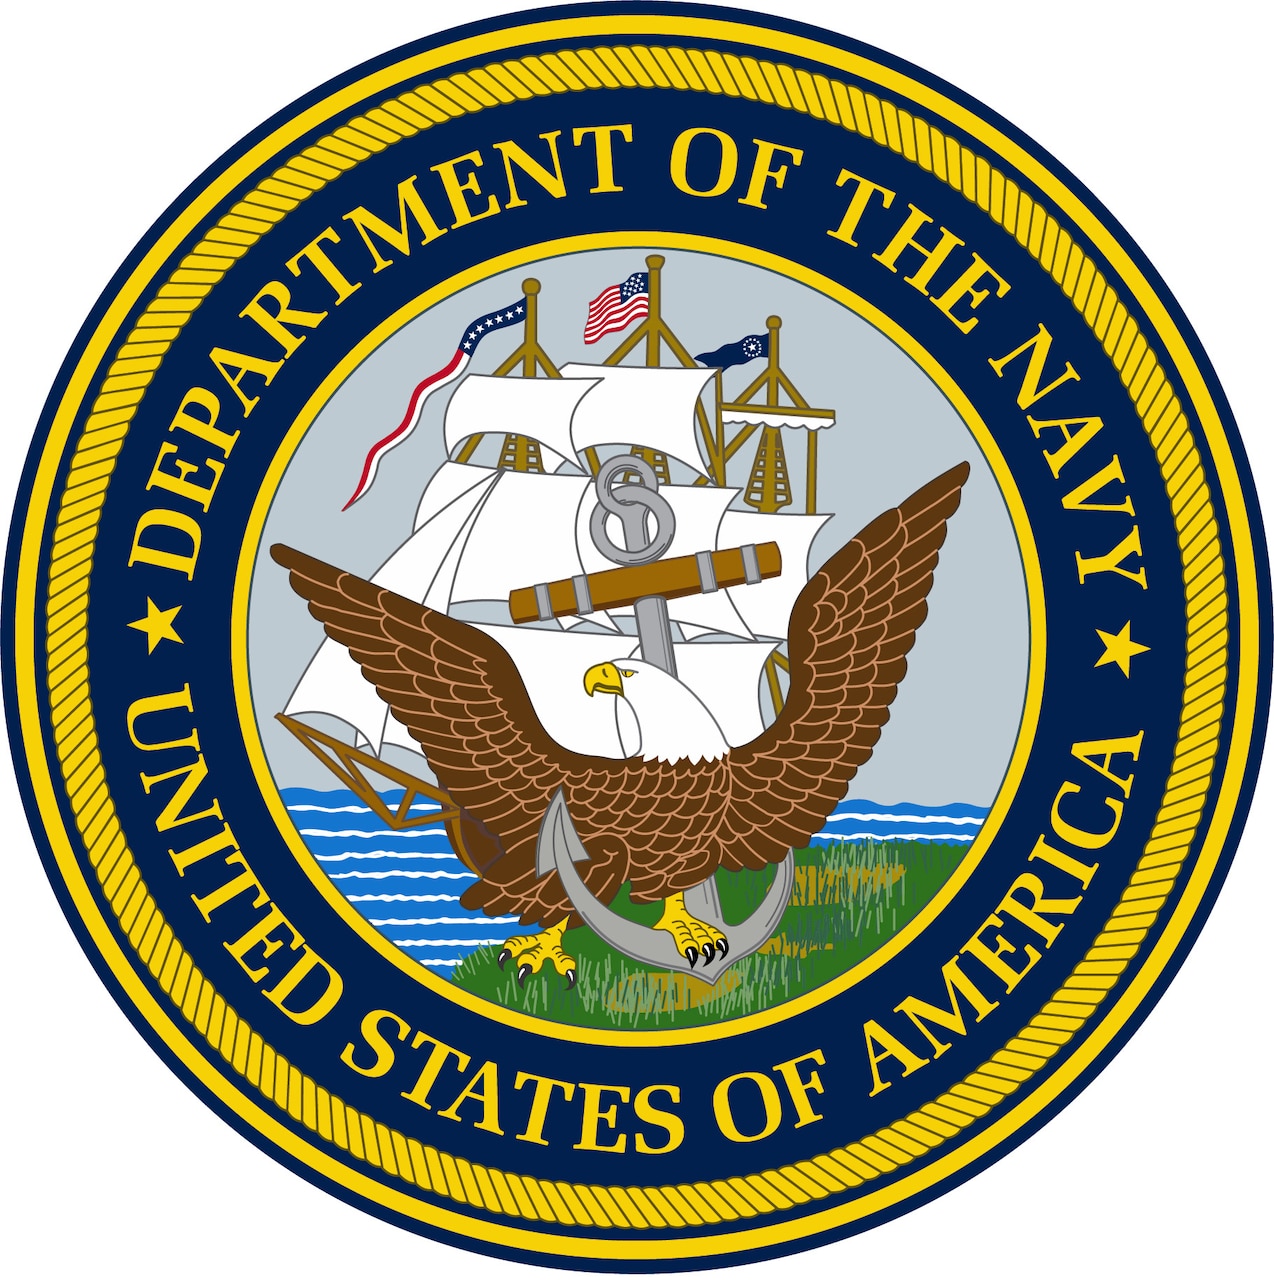 www.navy.mil